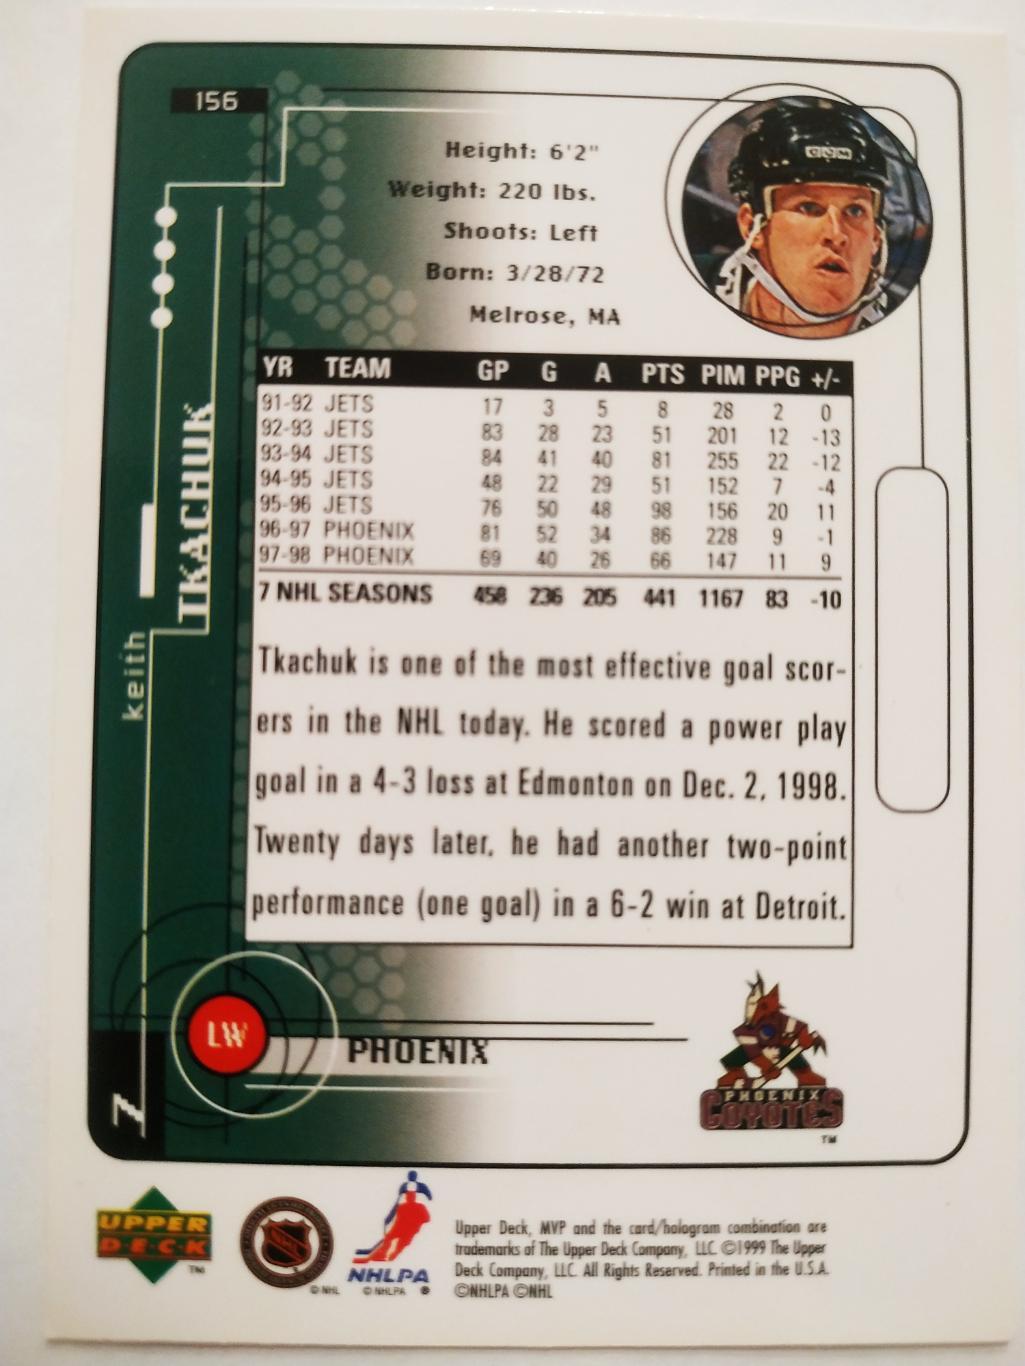 ХОККЕЙ КАРТОЧКА НХЛ UPPER DECK MVP 1998-1999 NHL KEITH TKACHUK PHOENIX #156 1